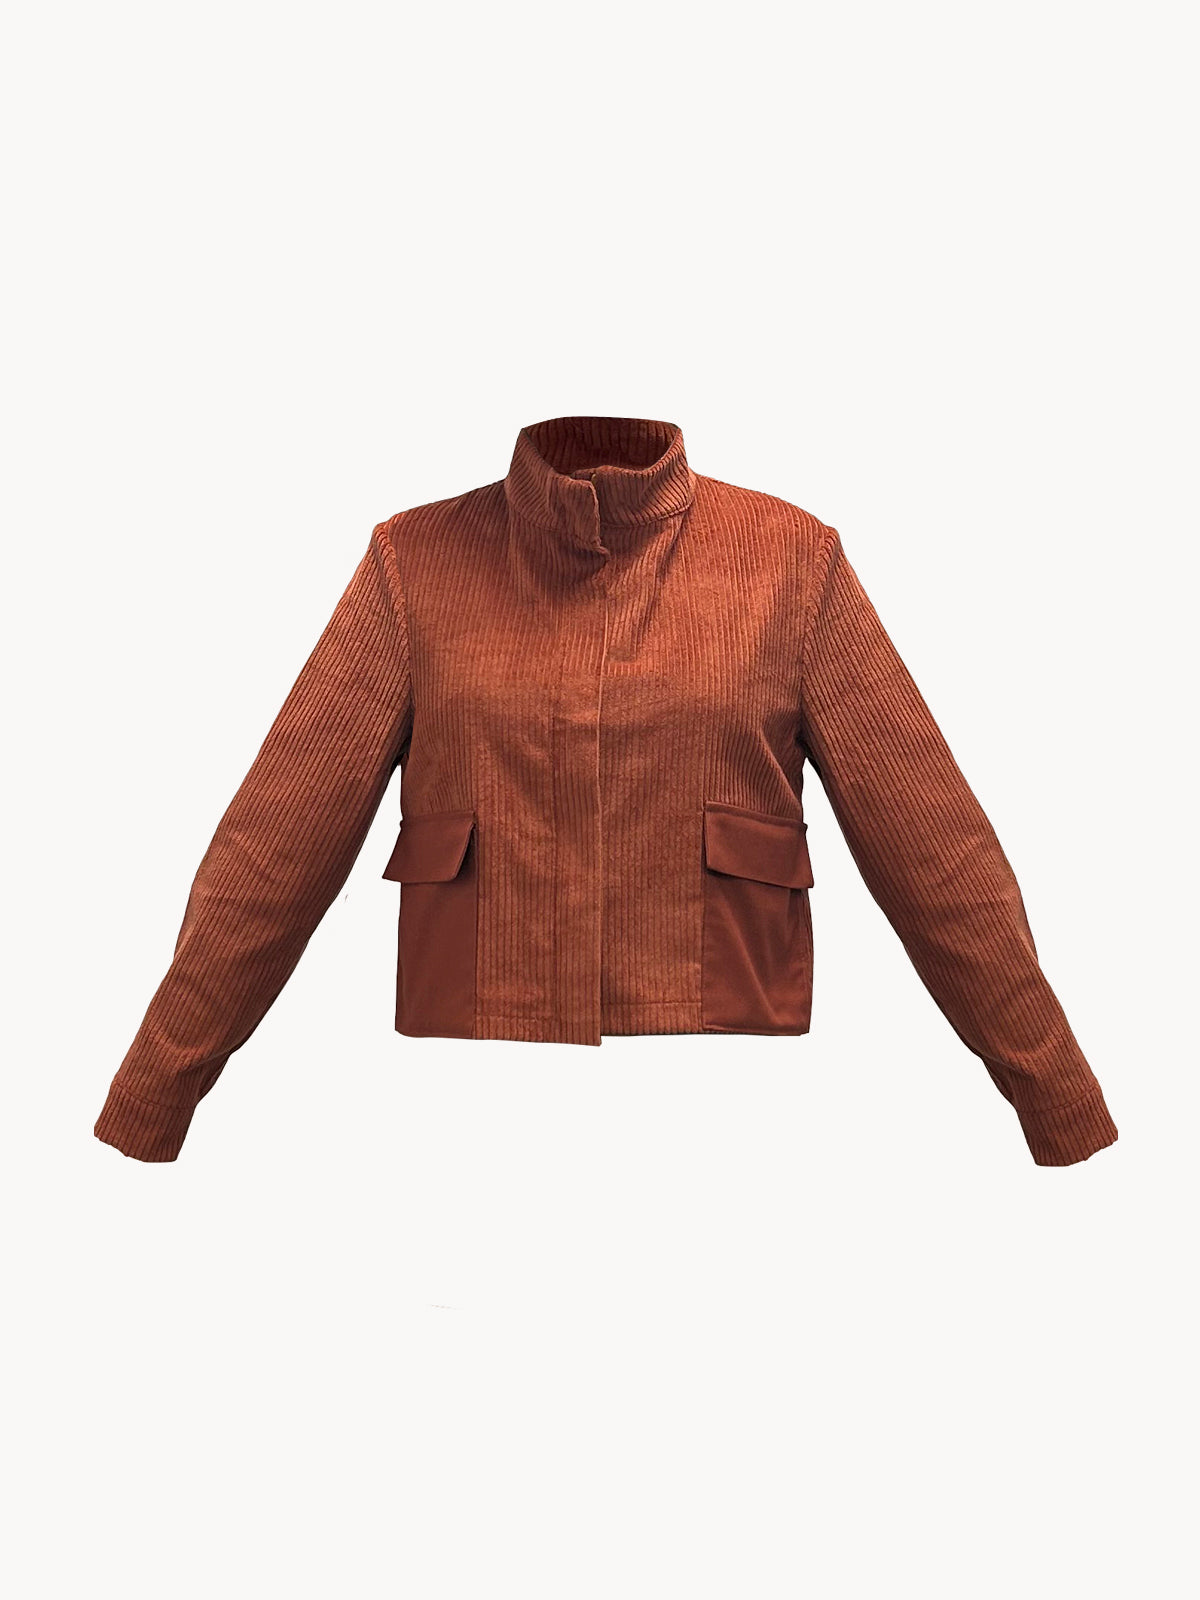 Terracotta short women's jacket